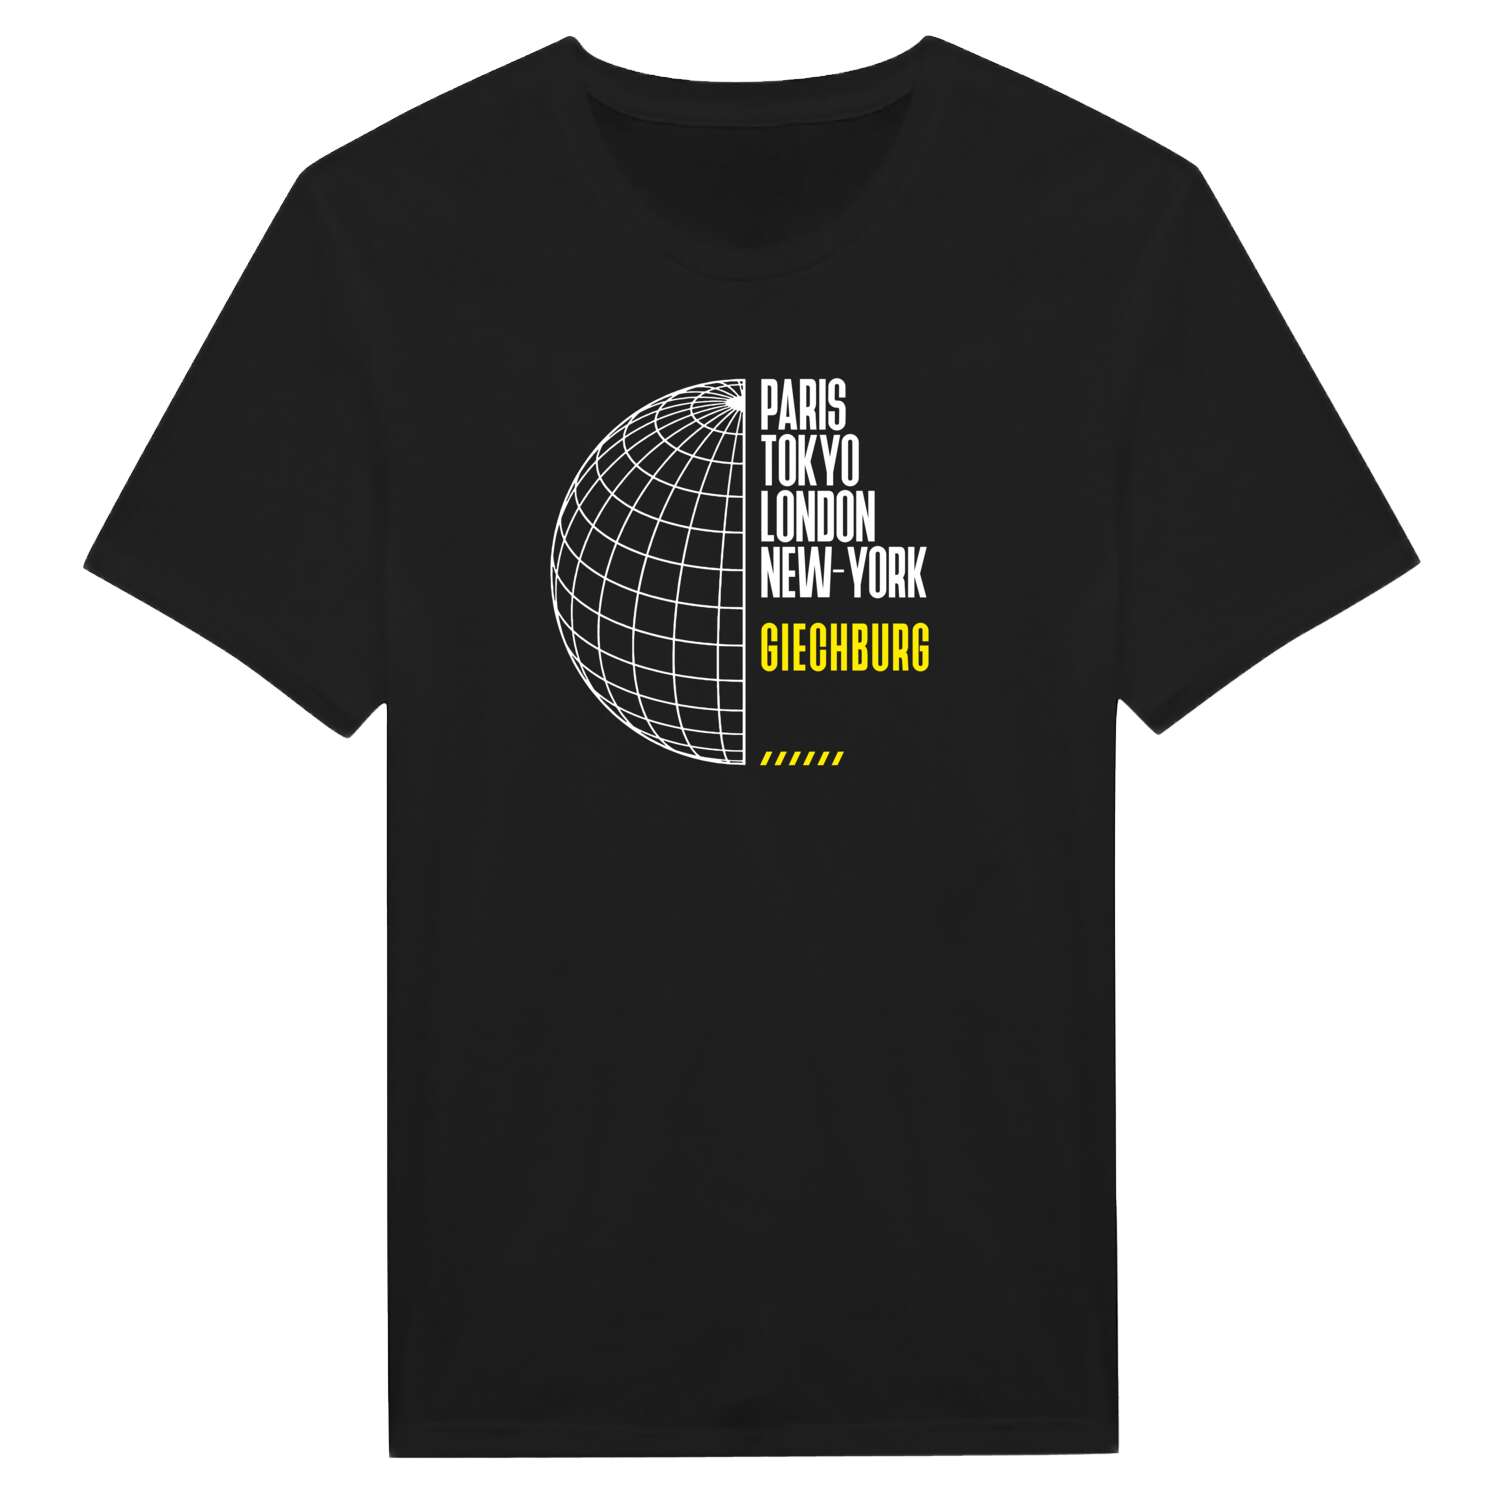 Giechburg T-Shirt »Paris Tokyo London«